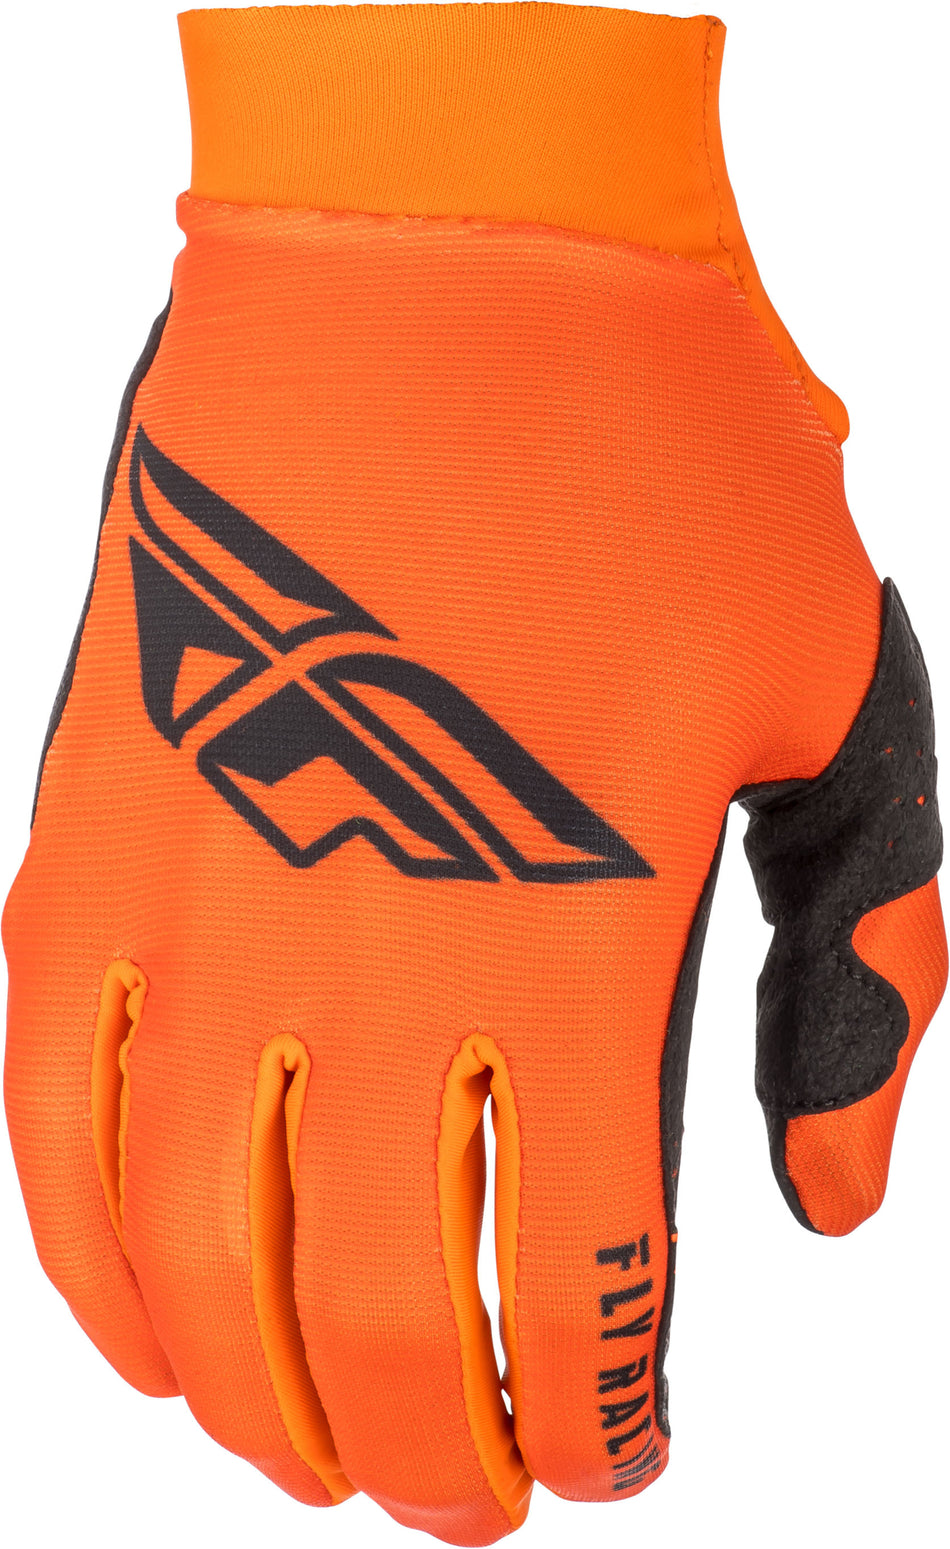 FLY RACING Pro Lite Gloves Orange/Black Sz 06 372-81706